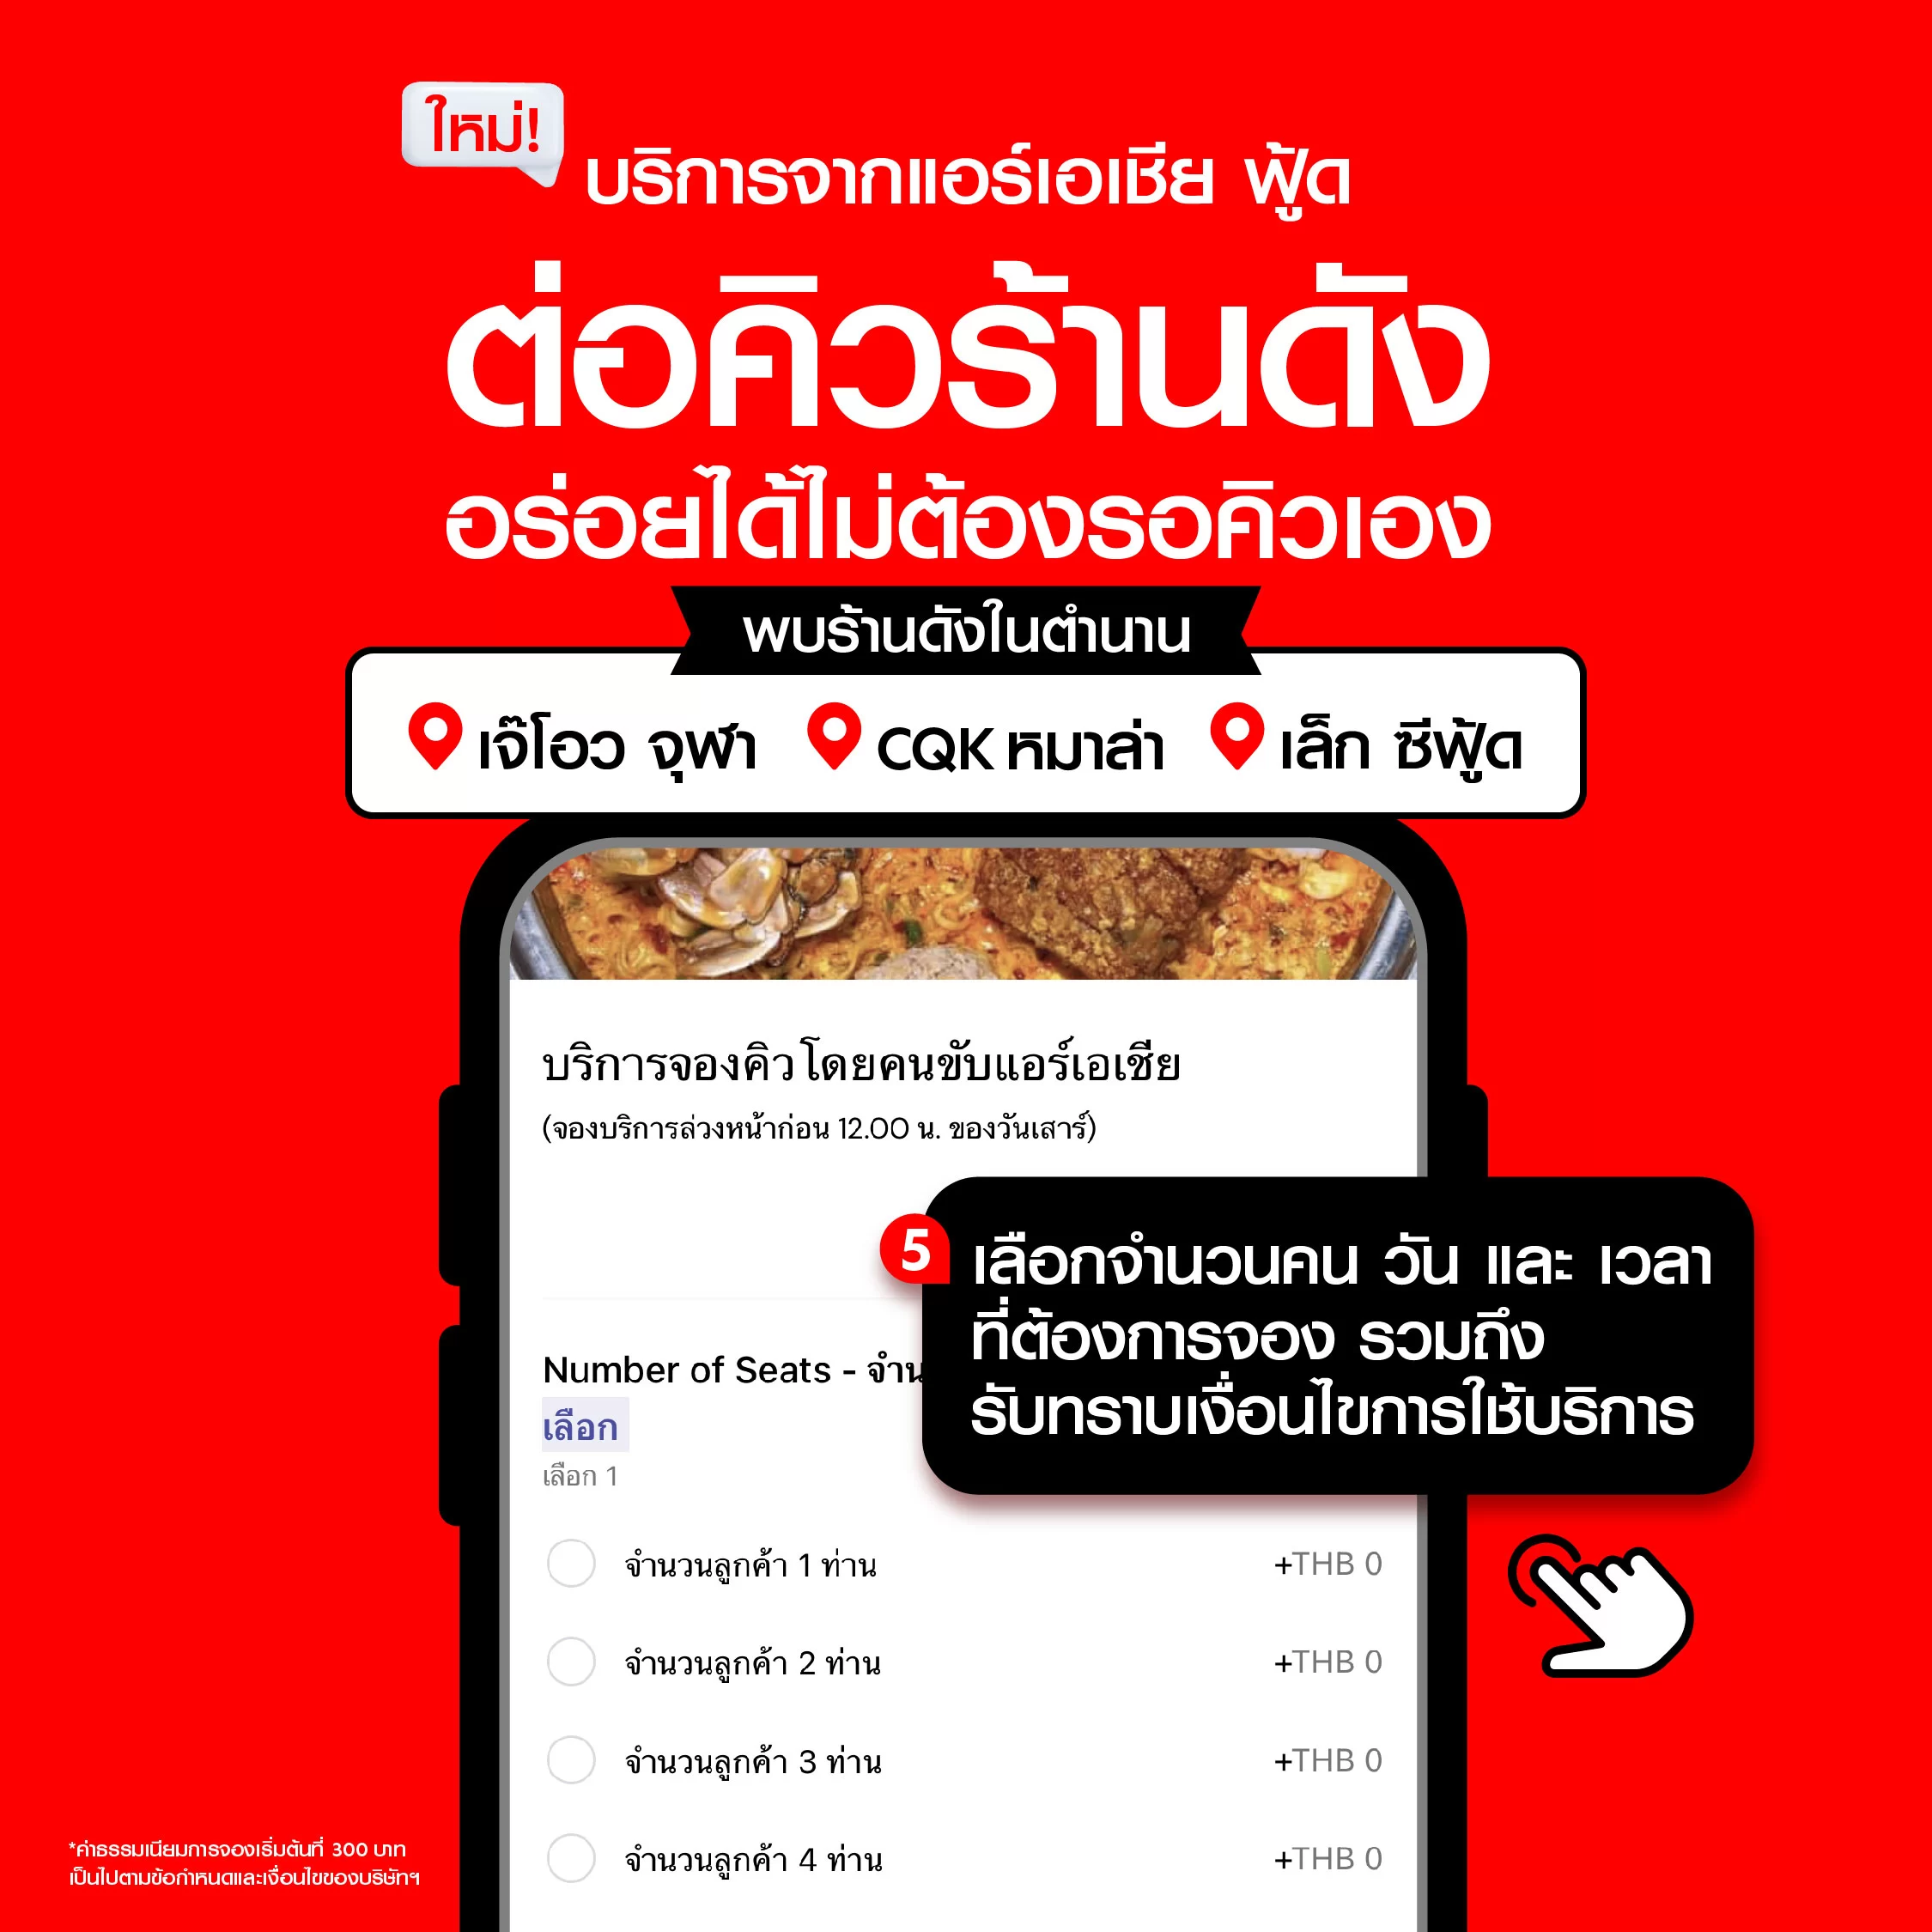 Social Media FB5 | airasia super app | หาคนต่อคิวให้ เรียกใช้แอป airasia Super App